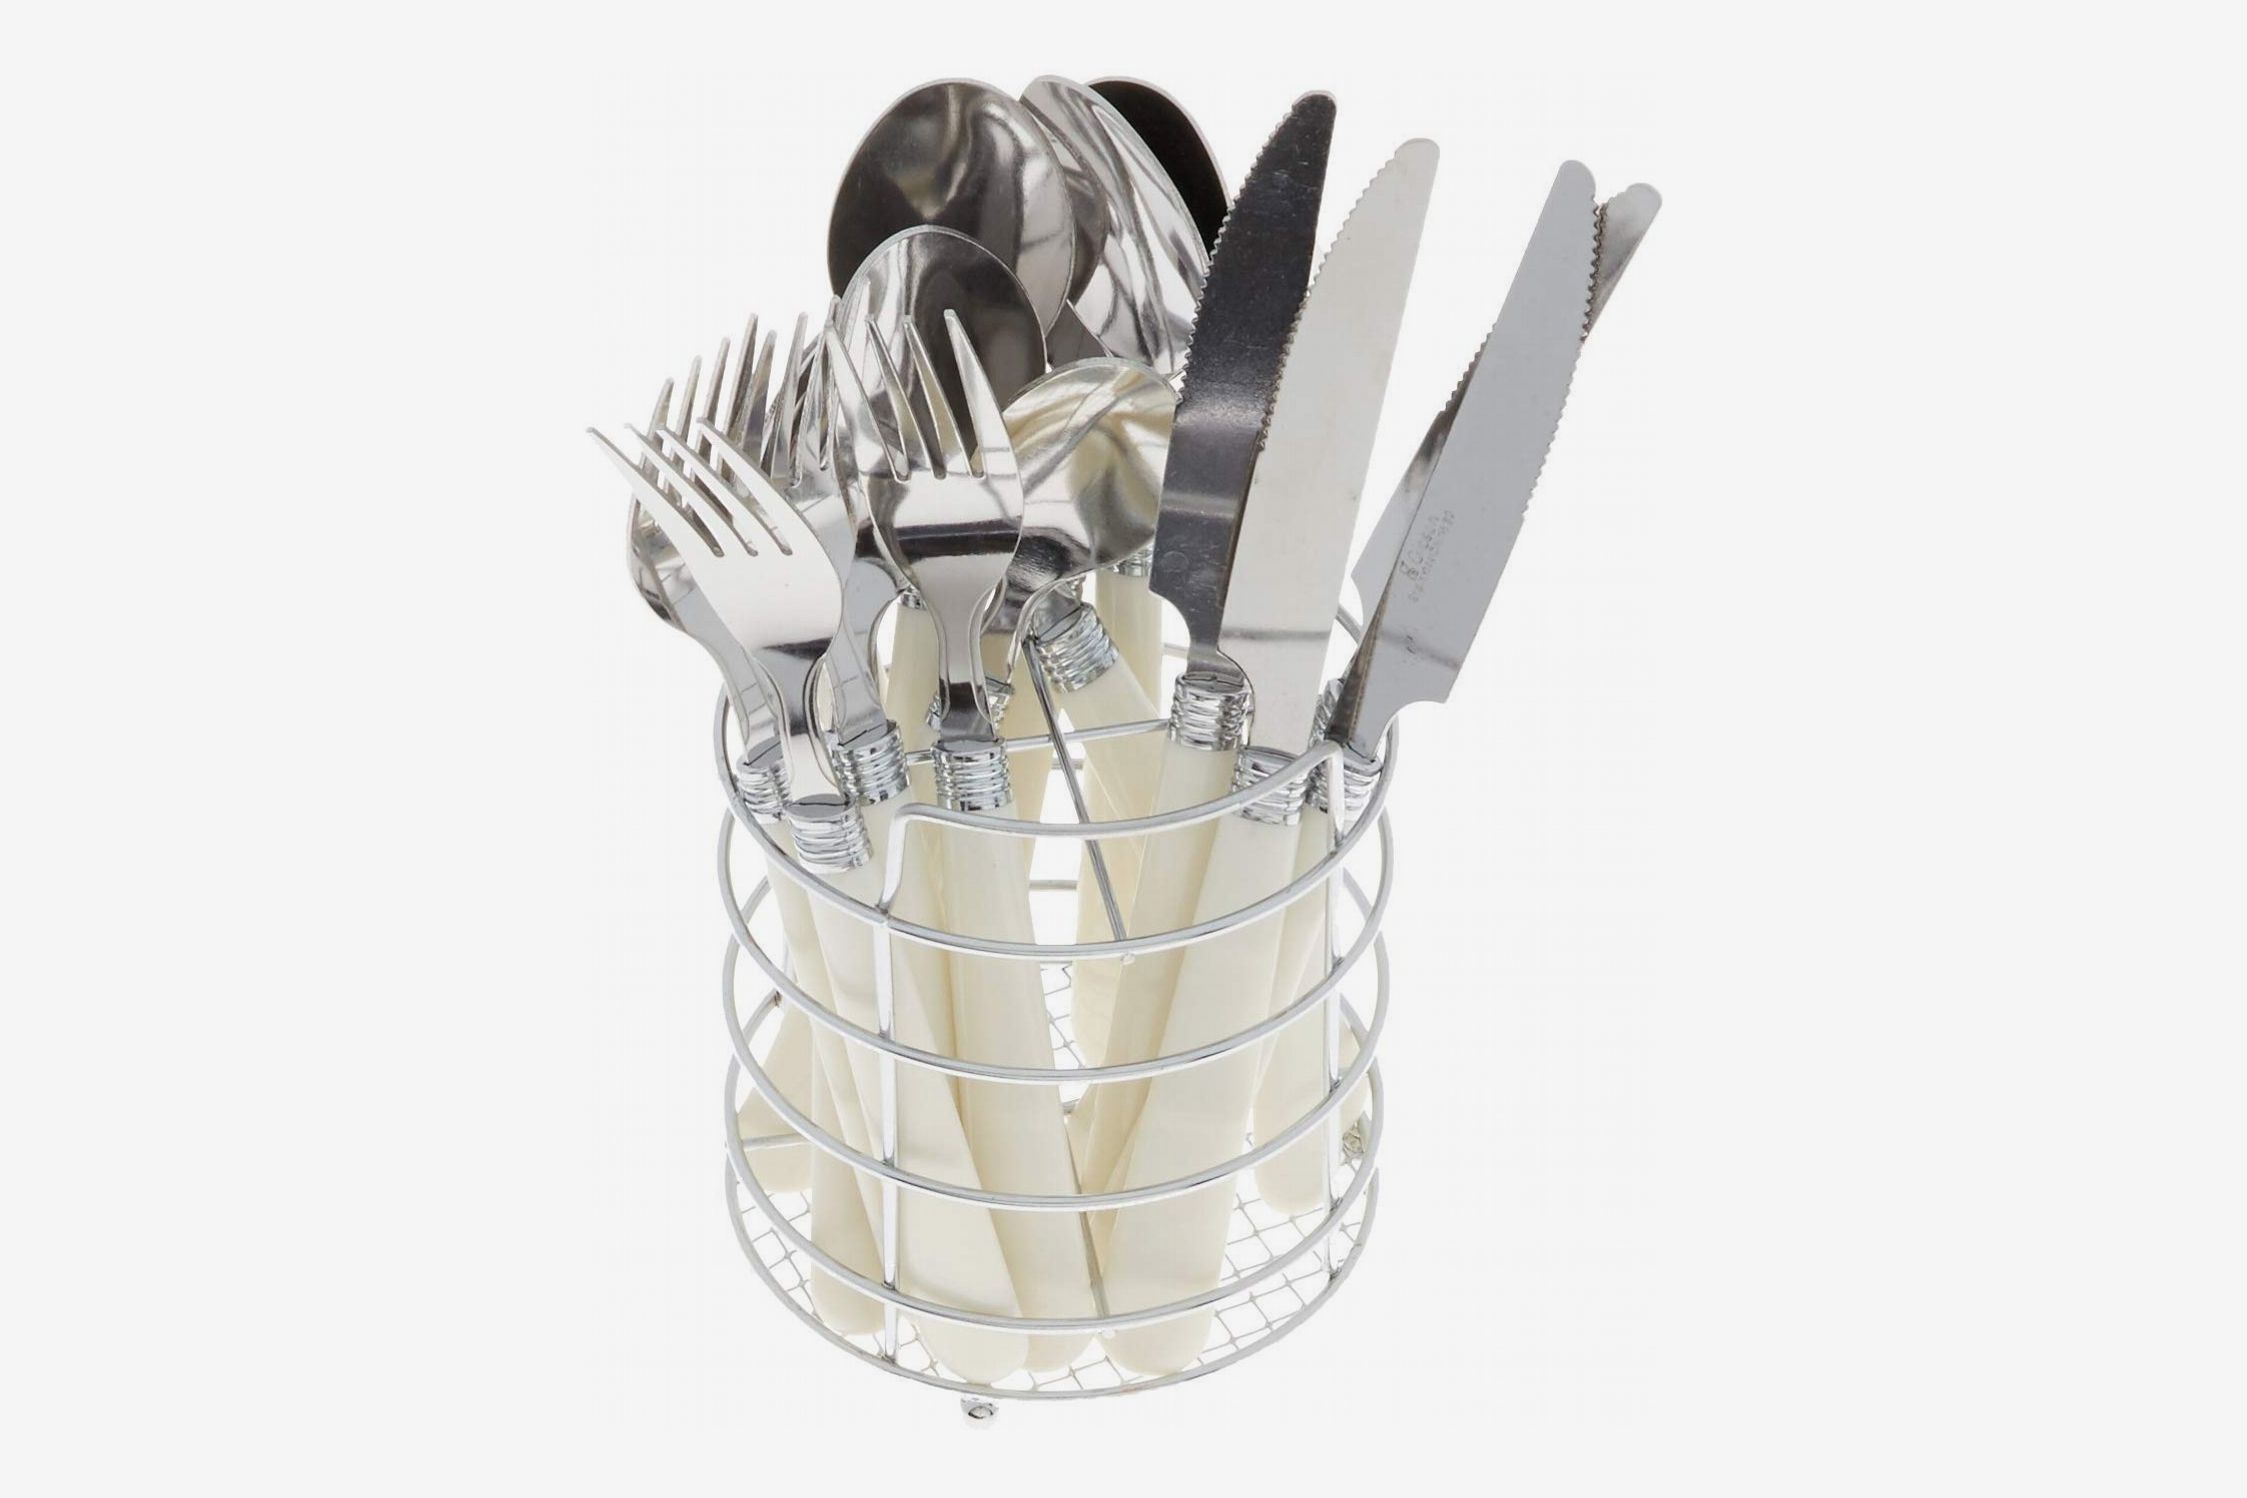 3 Pieces Silverware Cutlery Set, Stainless Steel Utensil Forks Spoons  Knives Set, Gold Dinner Sets Modern Flatware Eating Utensils Set for  Dinner，Blue1 